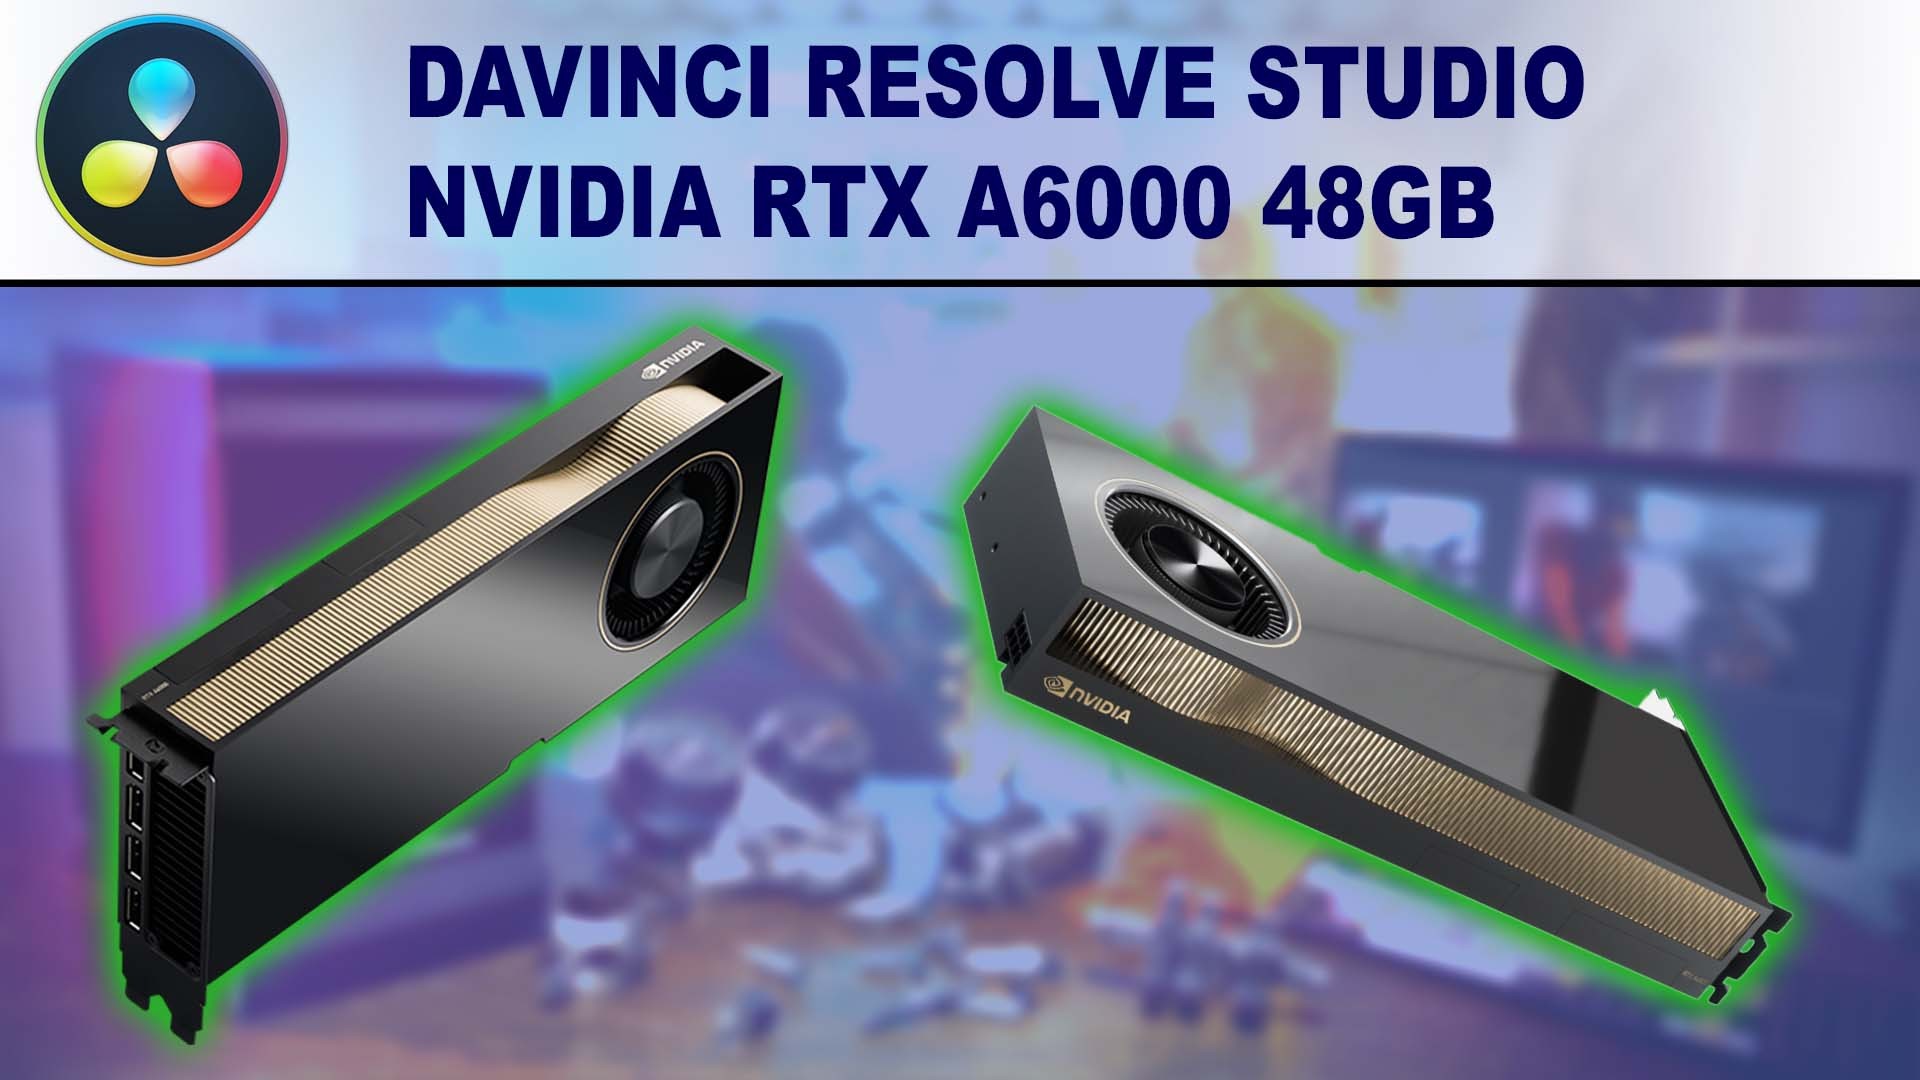 DaVinci Resolve Studio GPU Performance Benchmark - NVIDIA RTX A6000 48GB